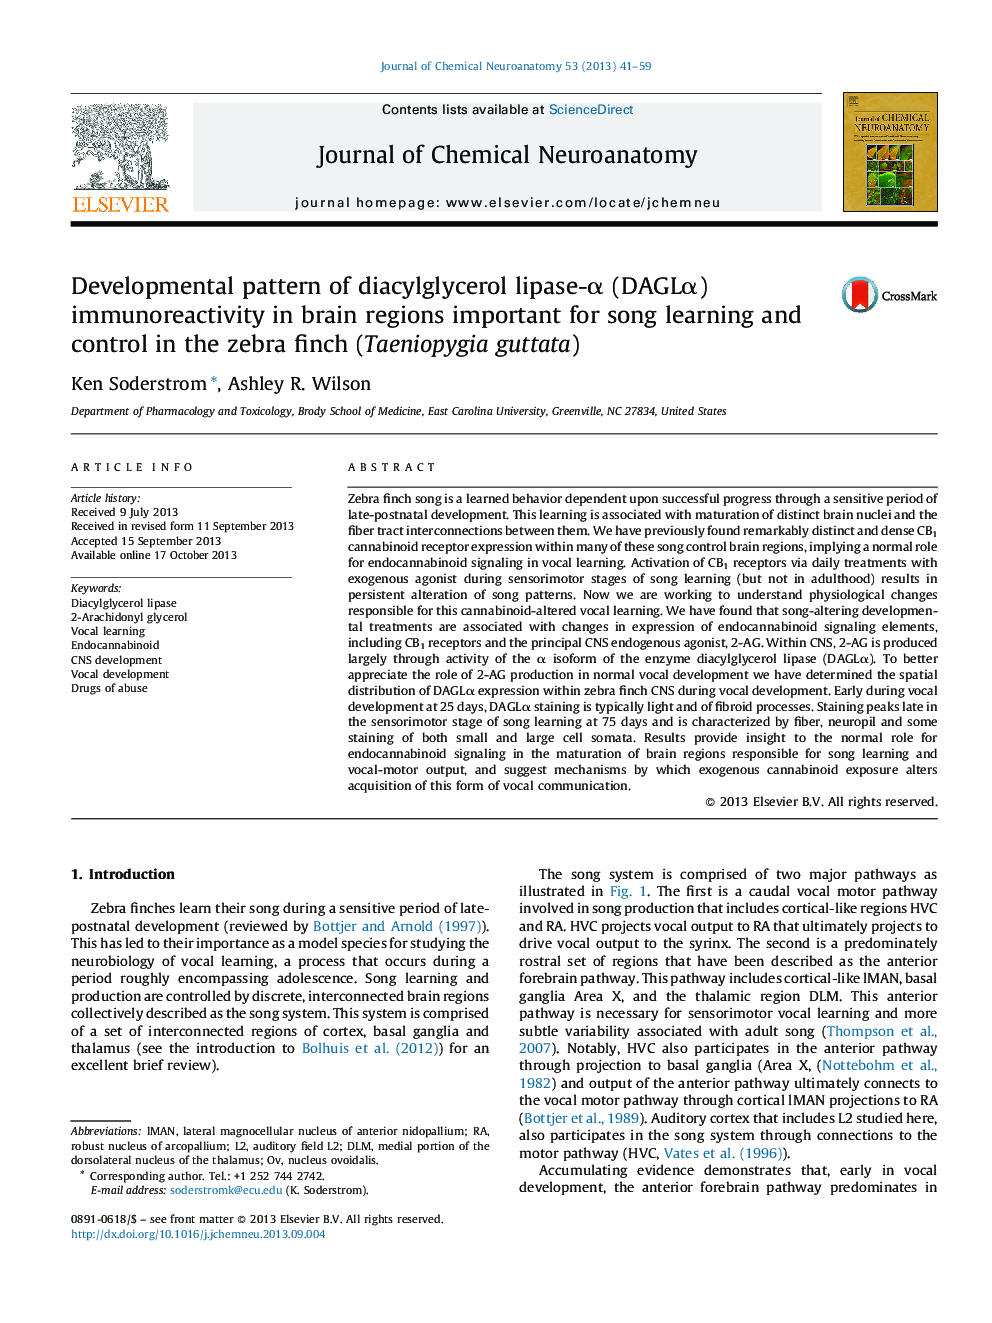 Developmental pattern of diacylglycerol lipase-Î± (DAGLÎ±) immunoreactivity in brain regions important for song learning and control in the zebra finch (Taeniopygia guttata)